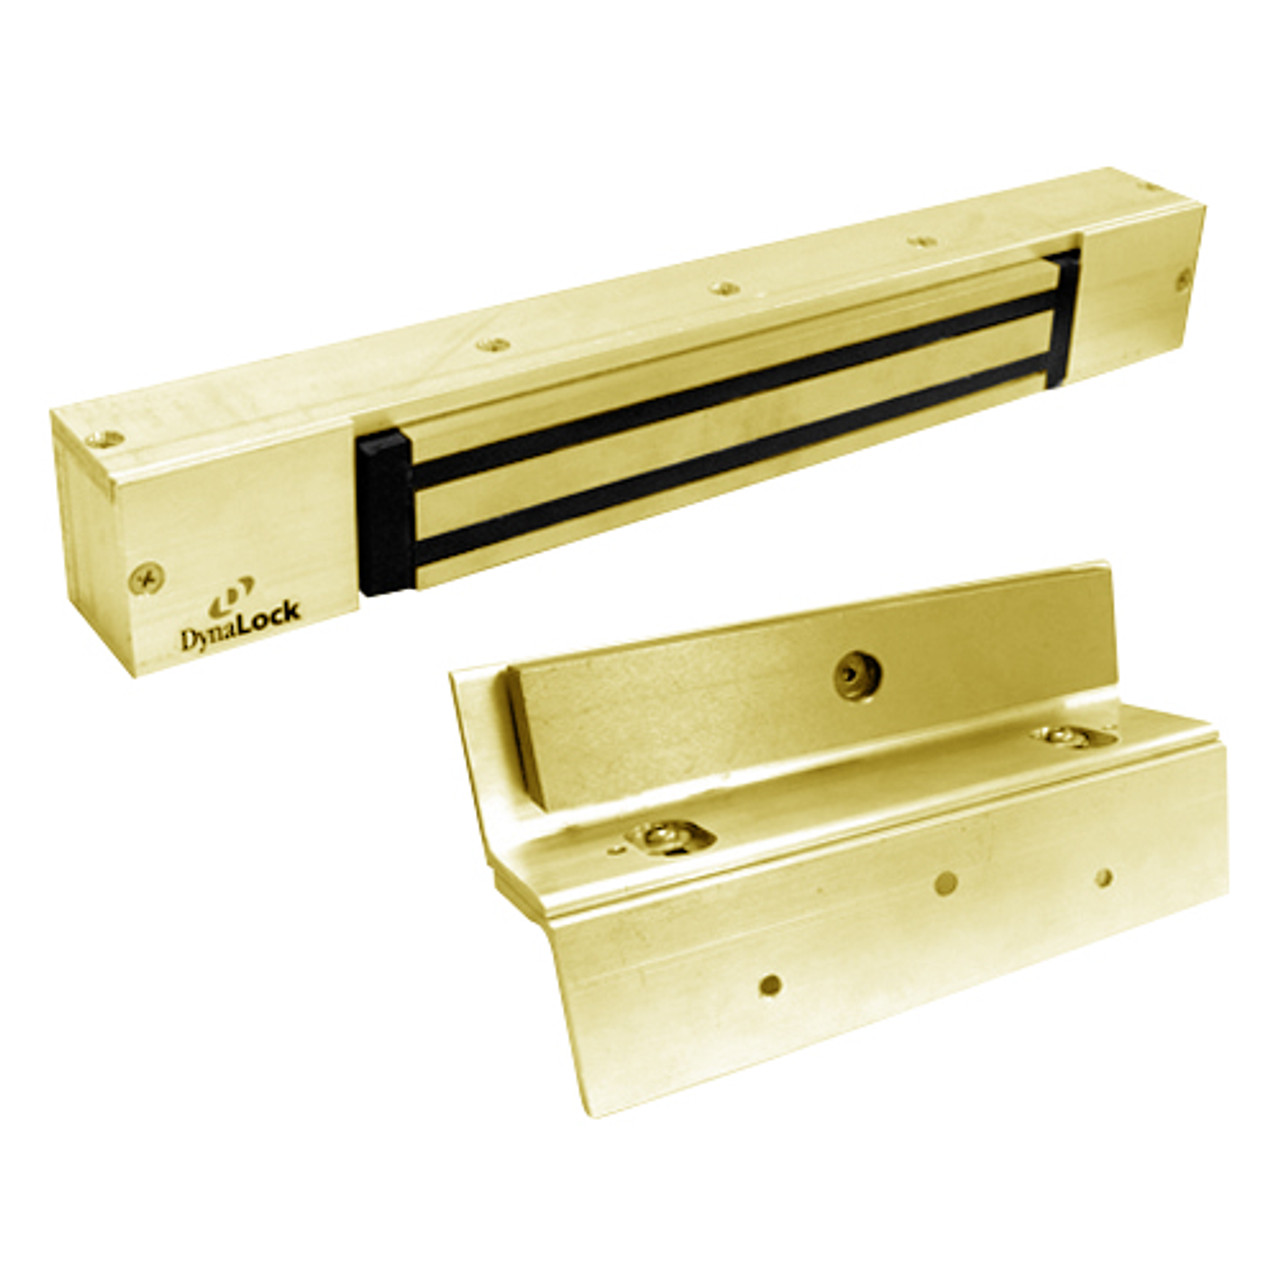 2268-TJ10-US3-DYN DynaLock 2268 Series Single Classic Low Profile Electromagnetic Lock for Inswing Door with DYN in Bright Brass